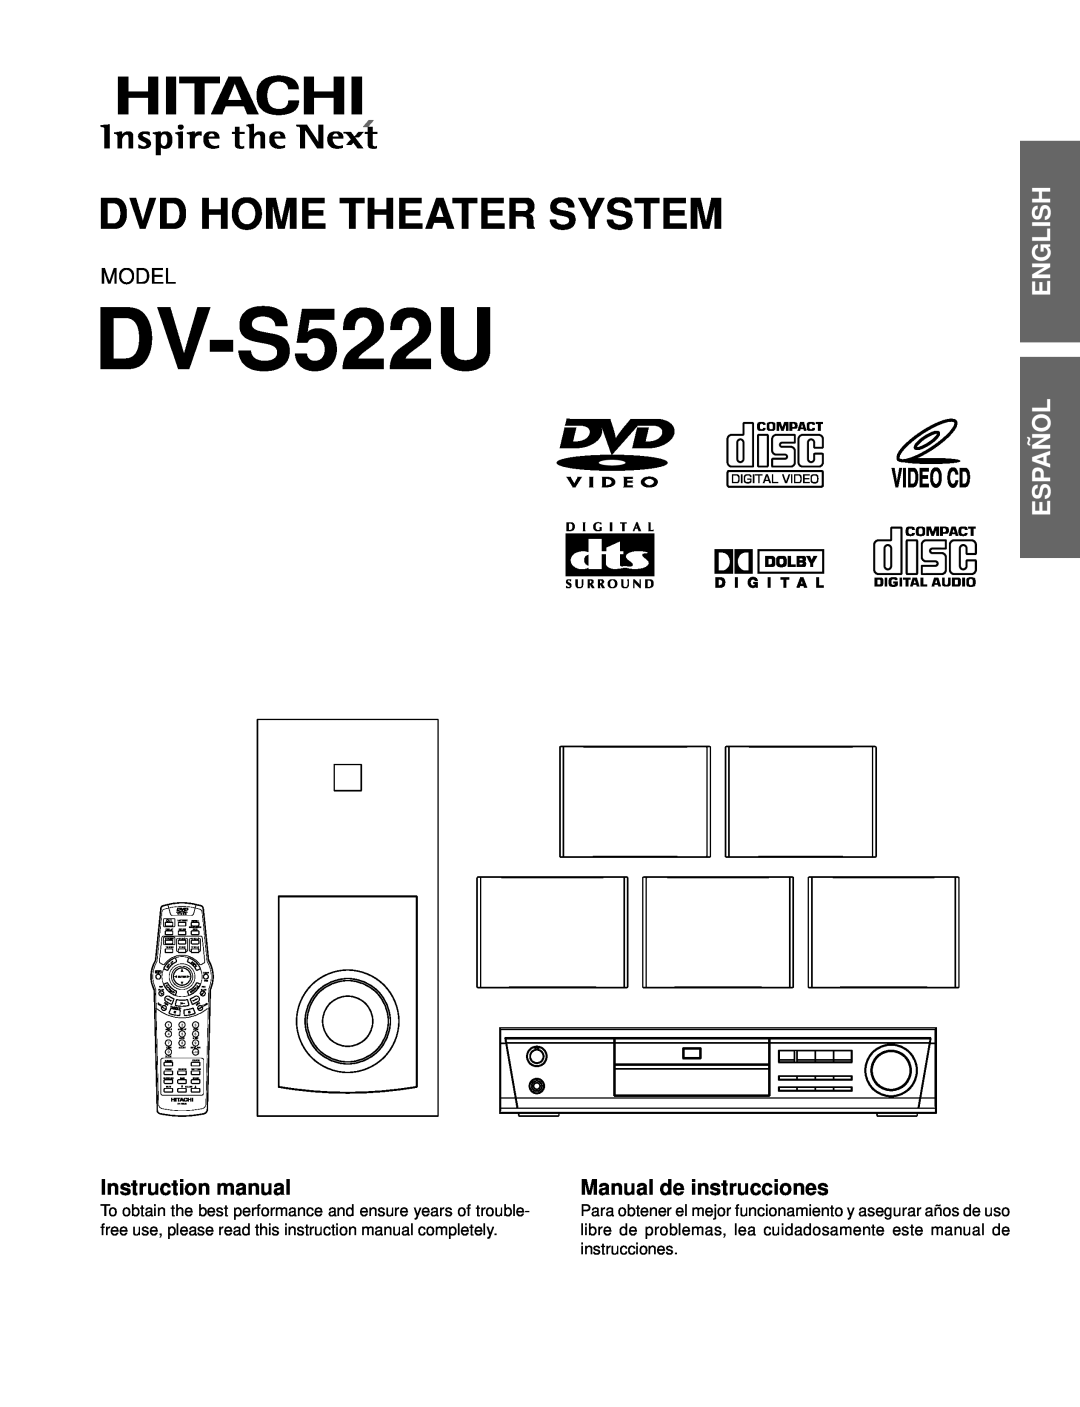 Hitachi DV-S522U instruction manual English Español, Model, Manual de instrucciones, Dvd Home Theater System 